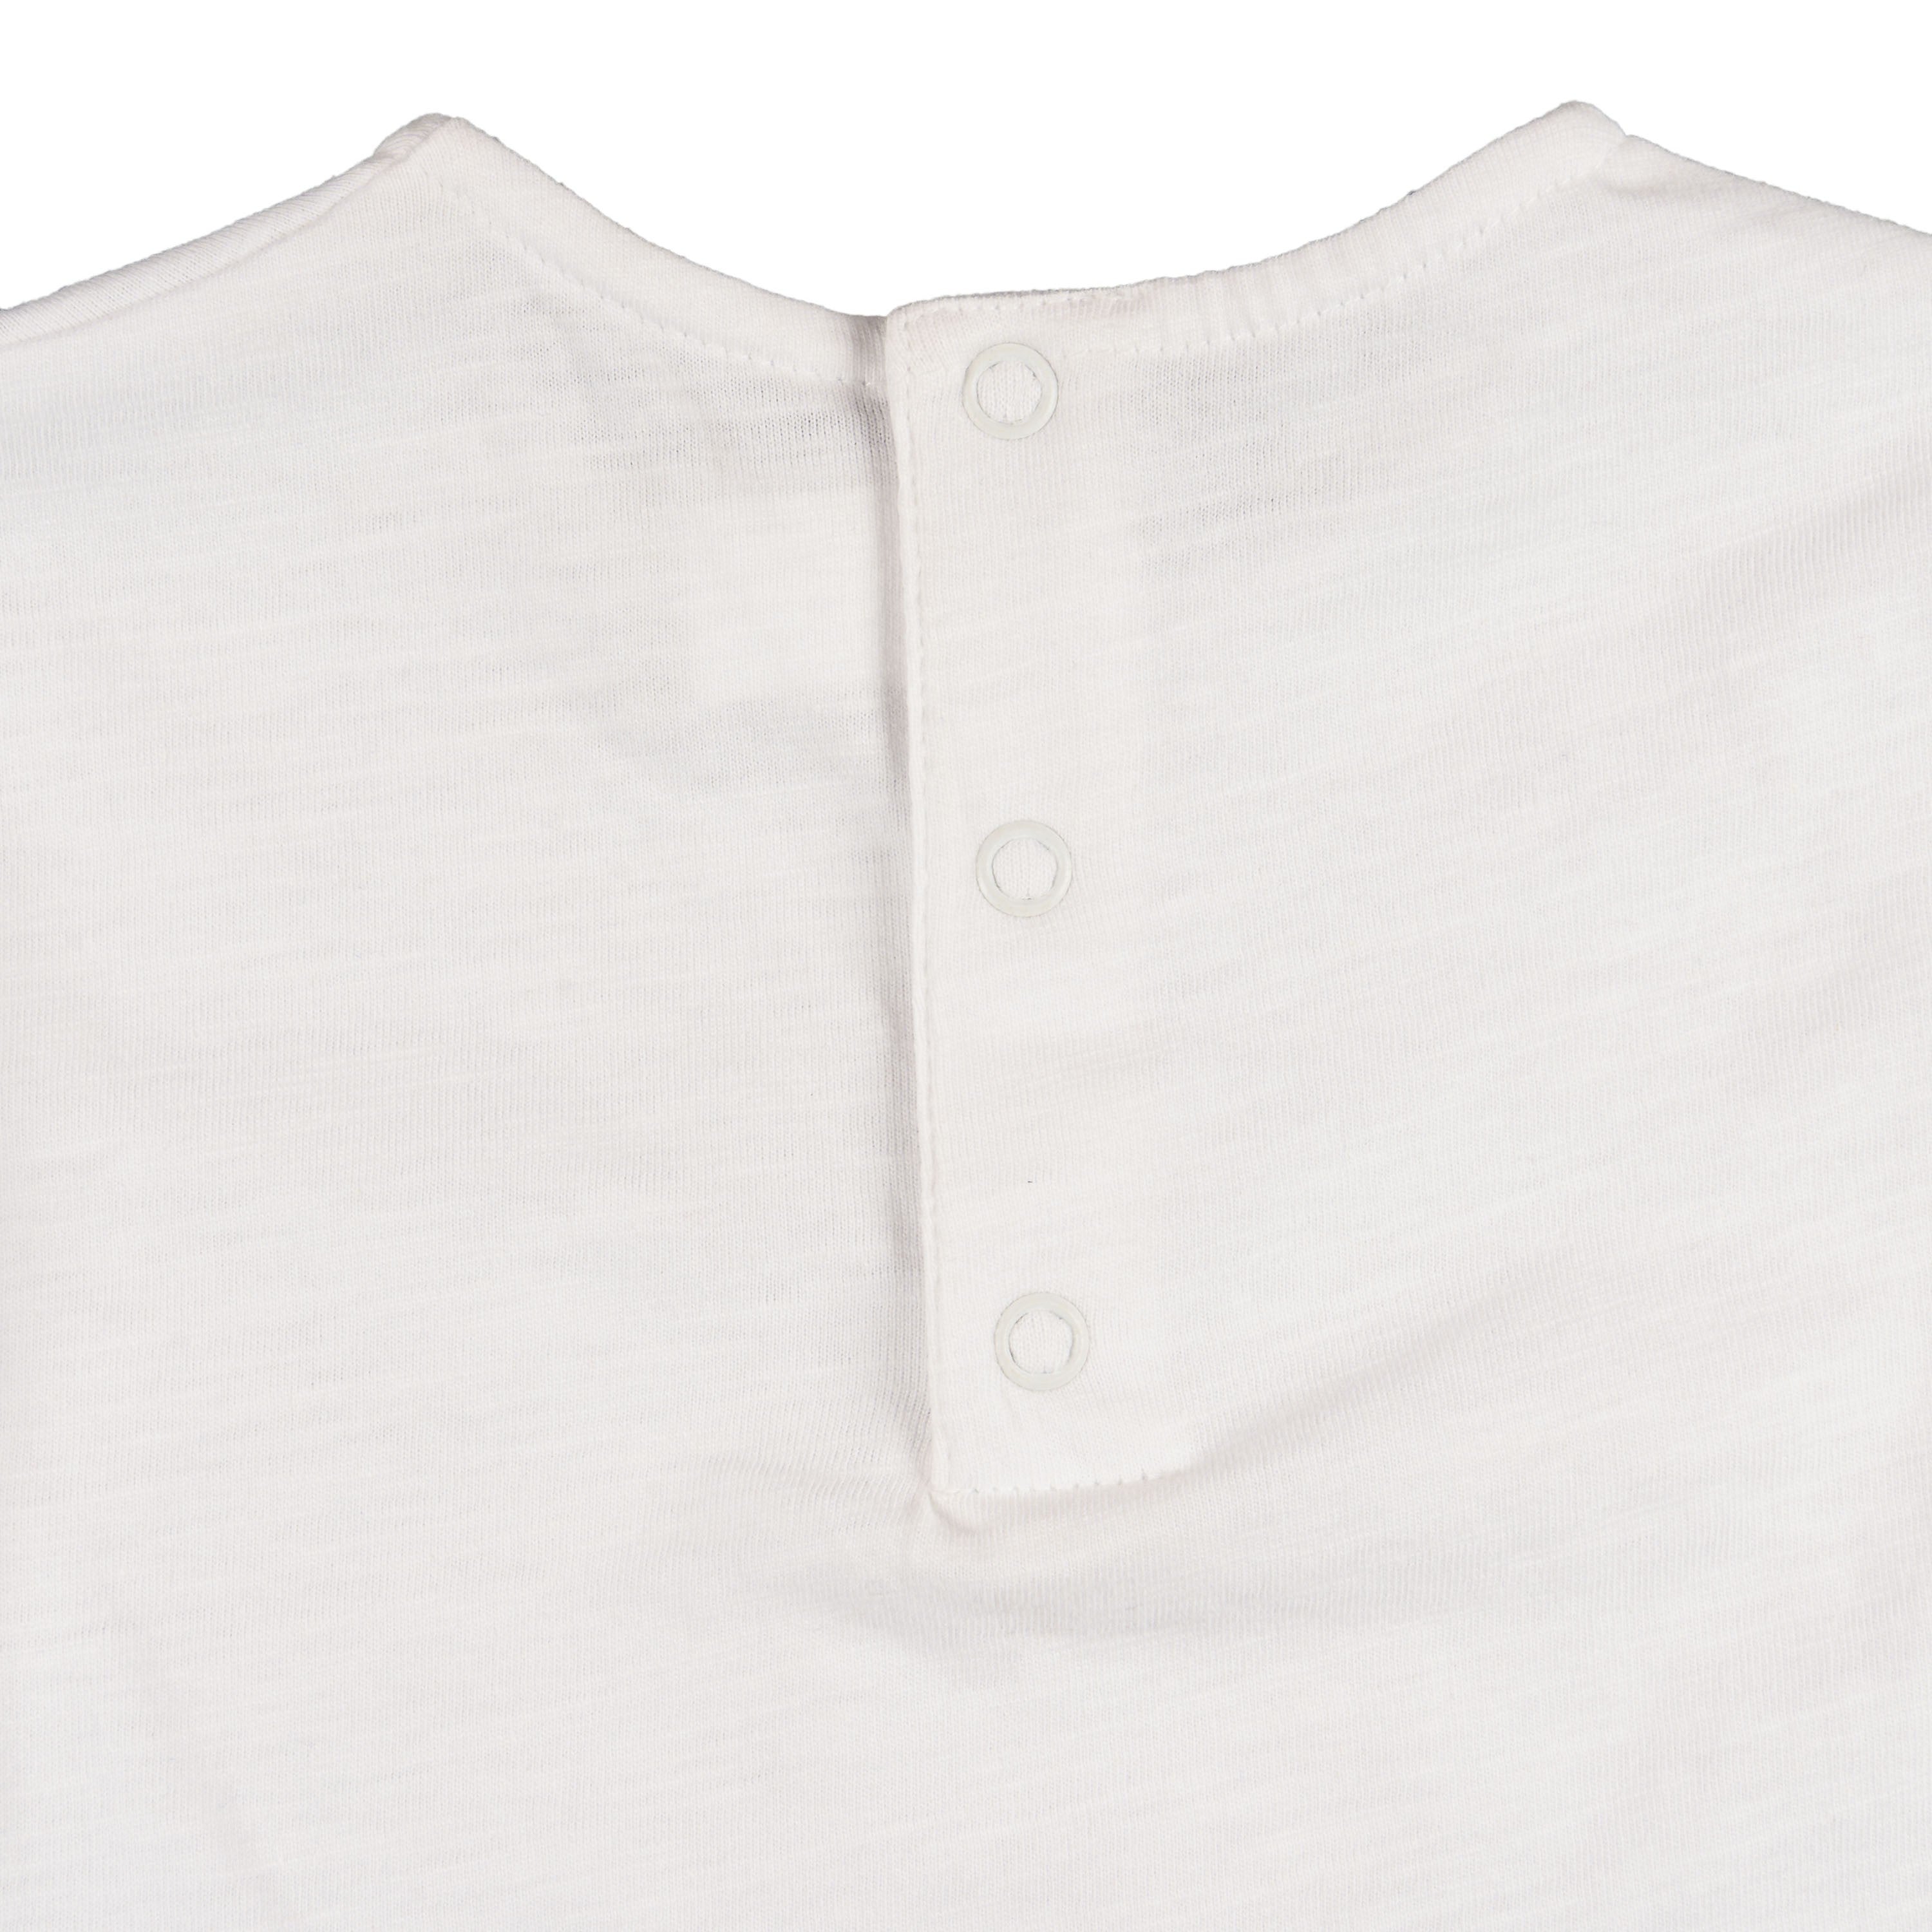 Camiseta de bebé blanco VERANO/Outlet